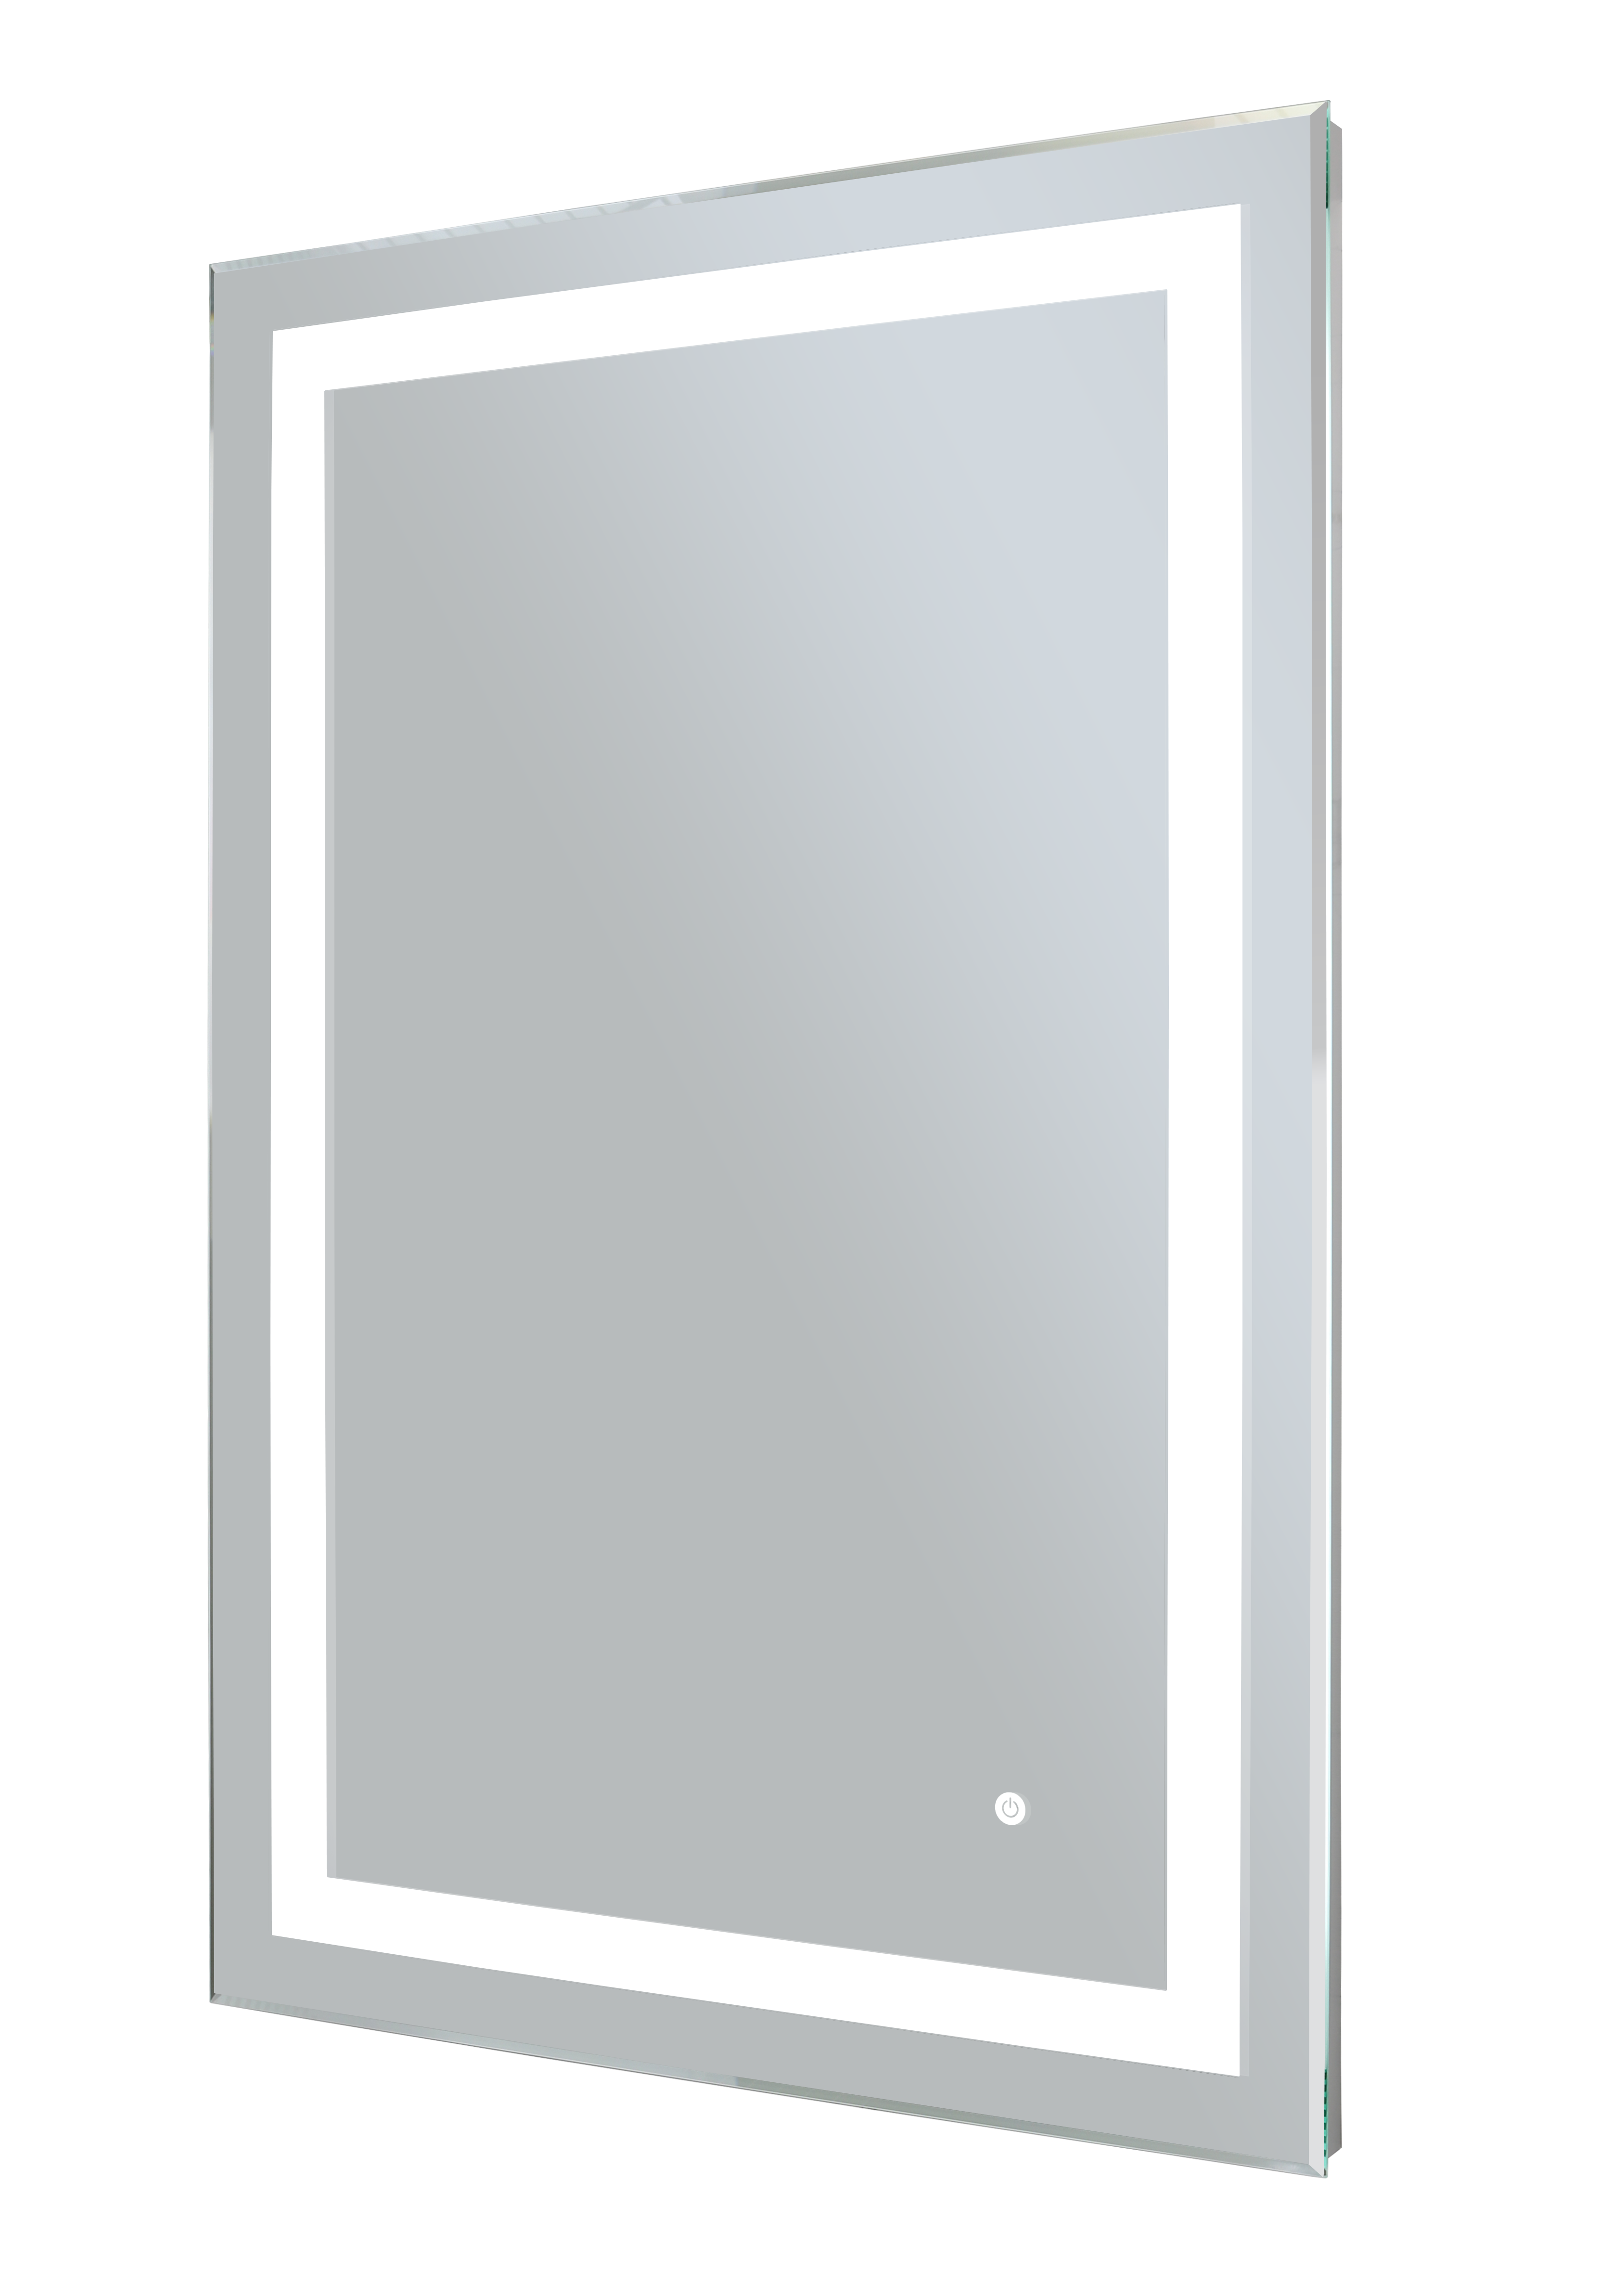 Motif Connect - Rectangular LED Mirror for Bathroom - Warm White Light -  Rectangular